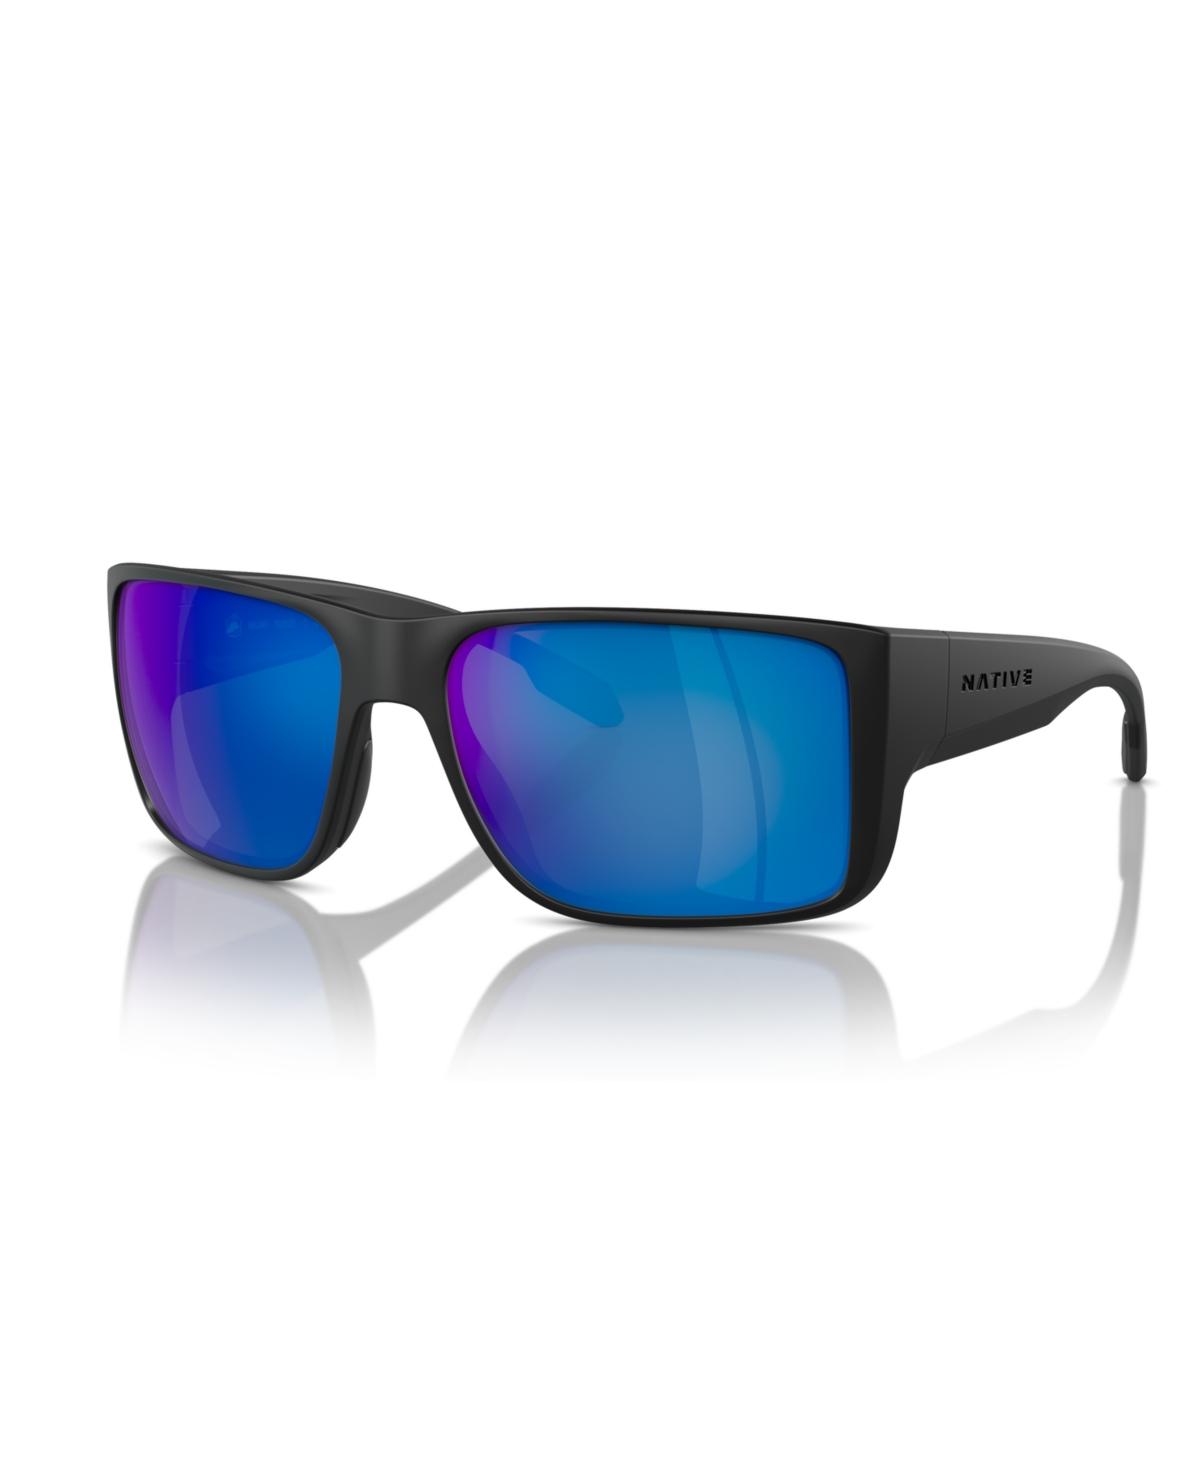 Men's Polarized Sunglasses, Badlands Xd9045 - Matte Black, Gray